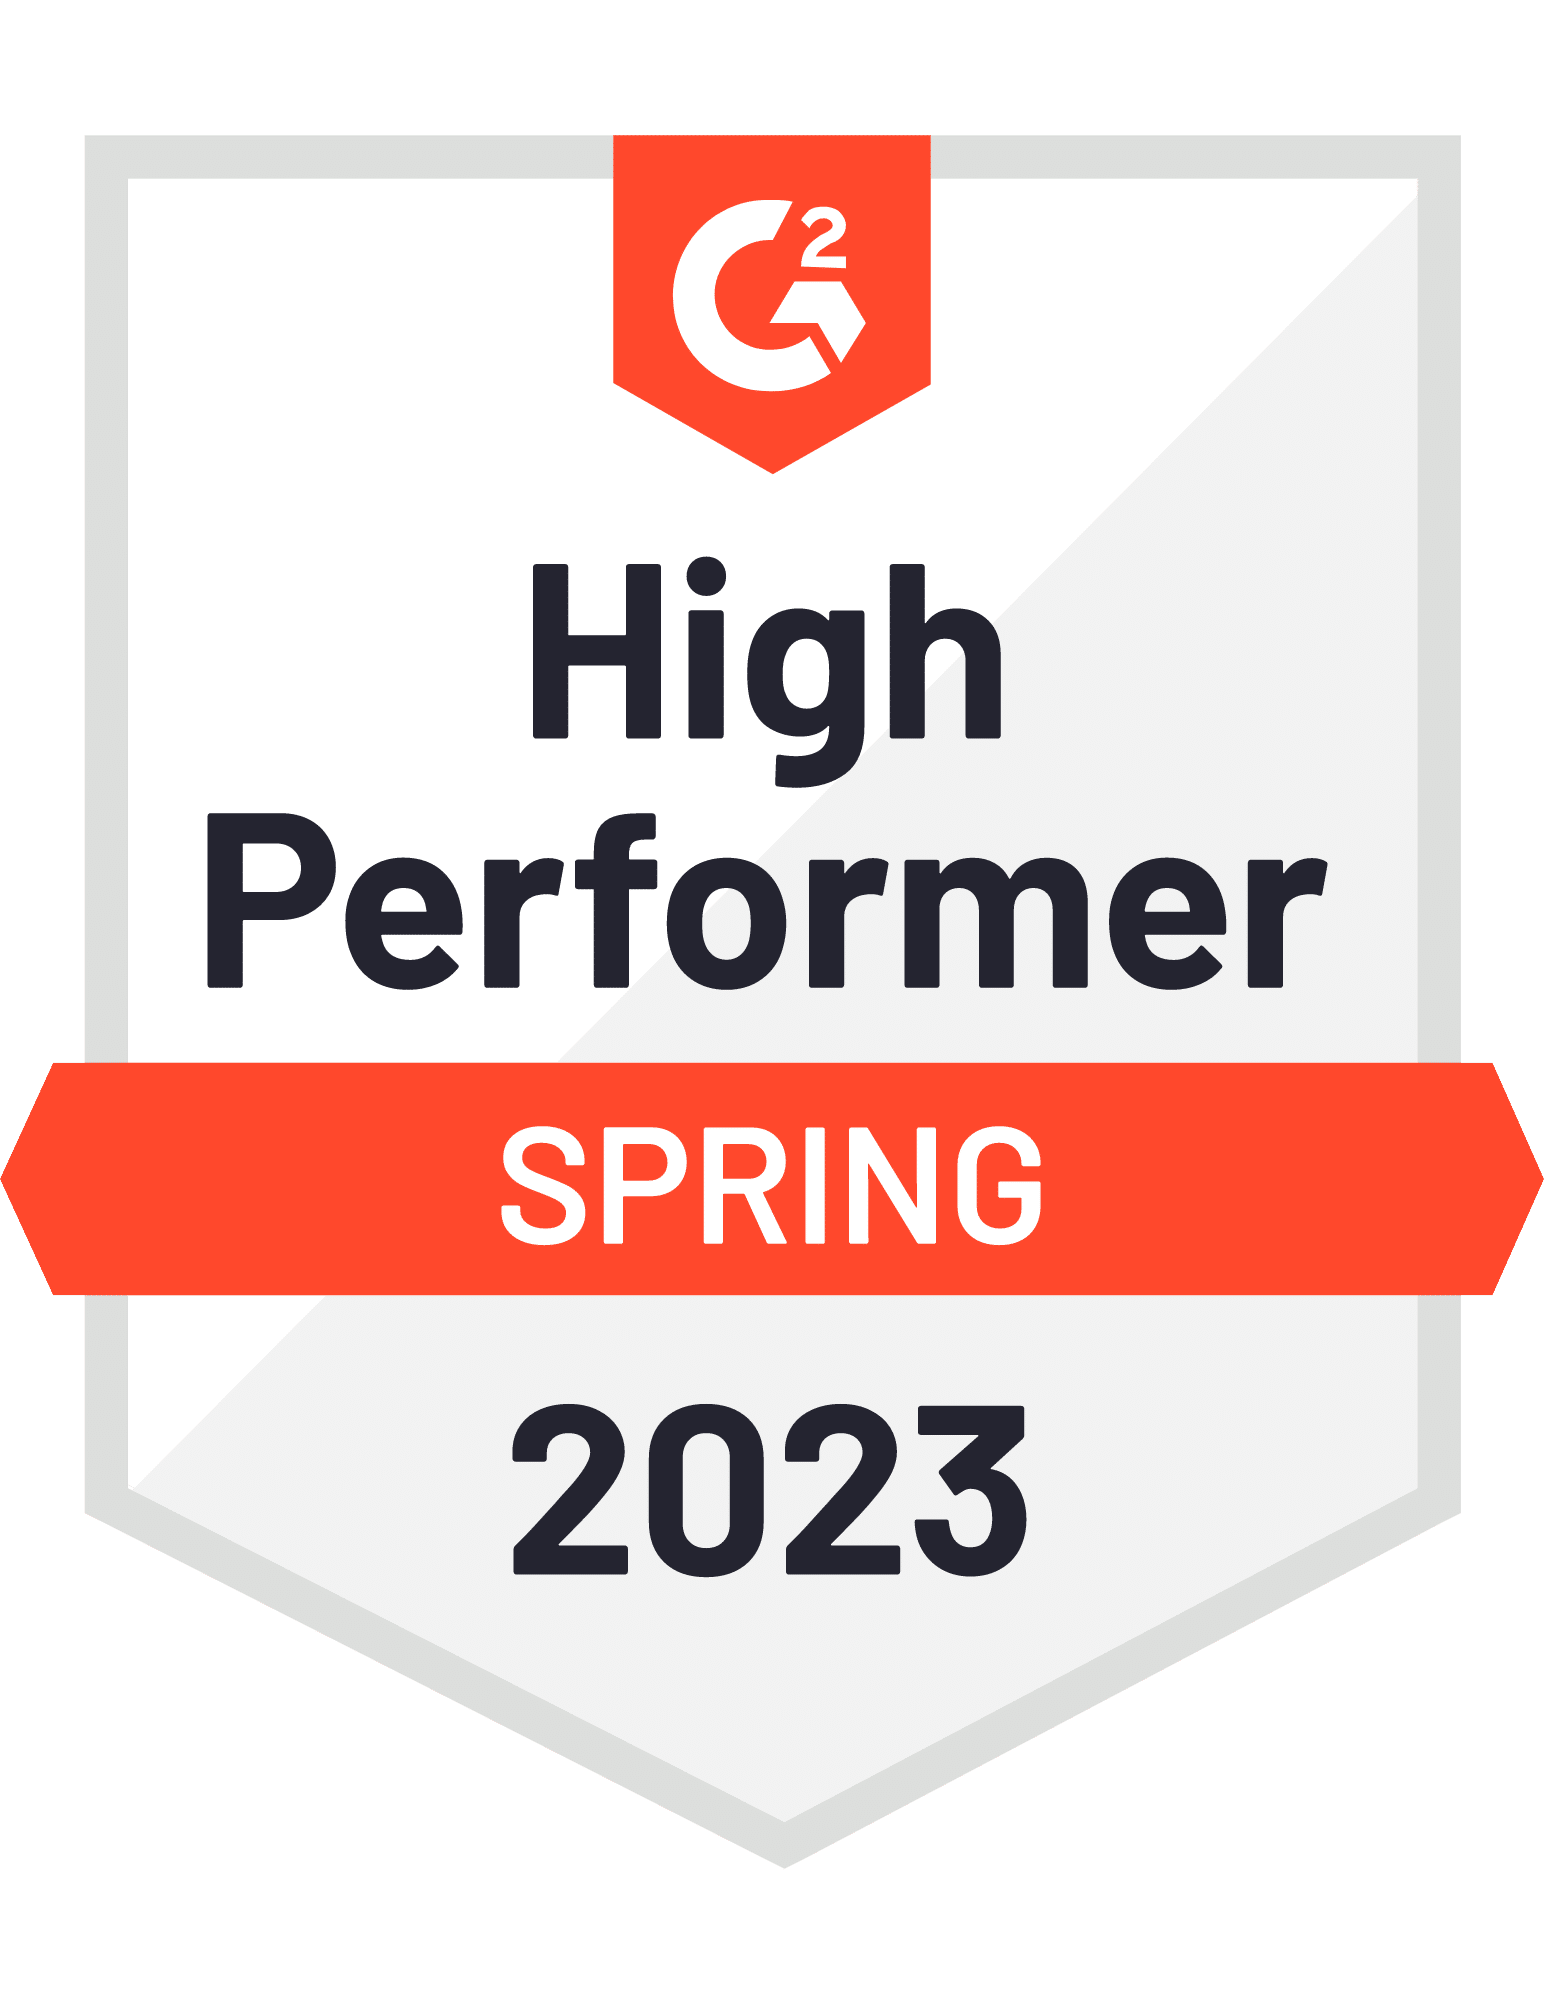 High Performer Spring 2023 G2 Award